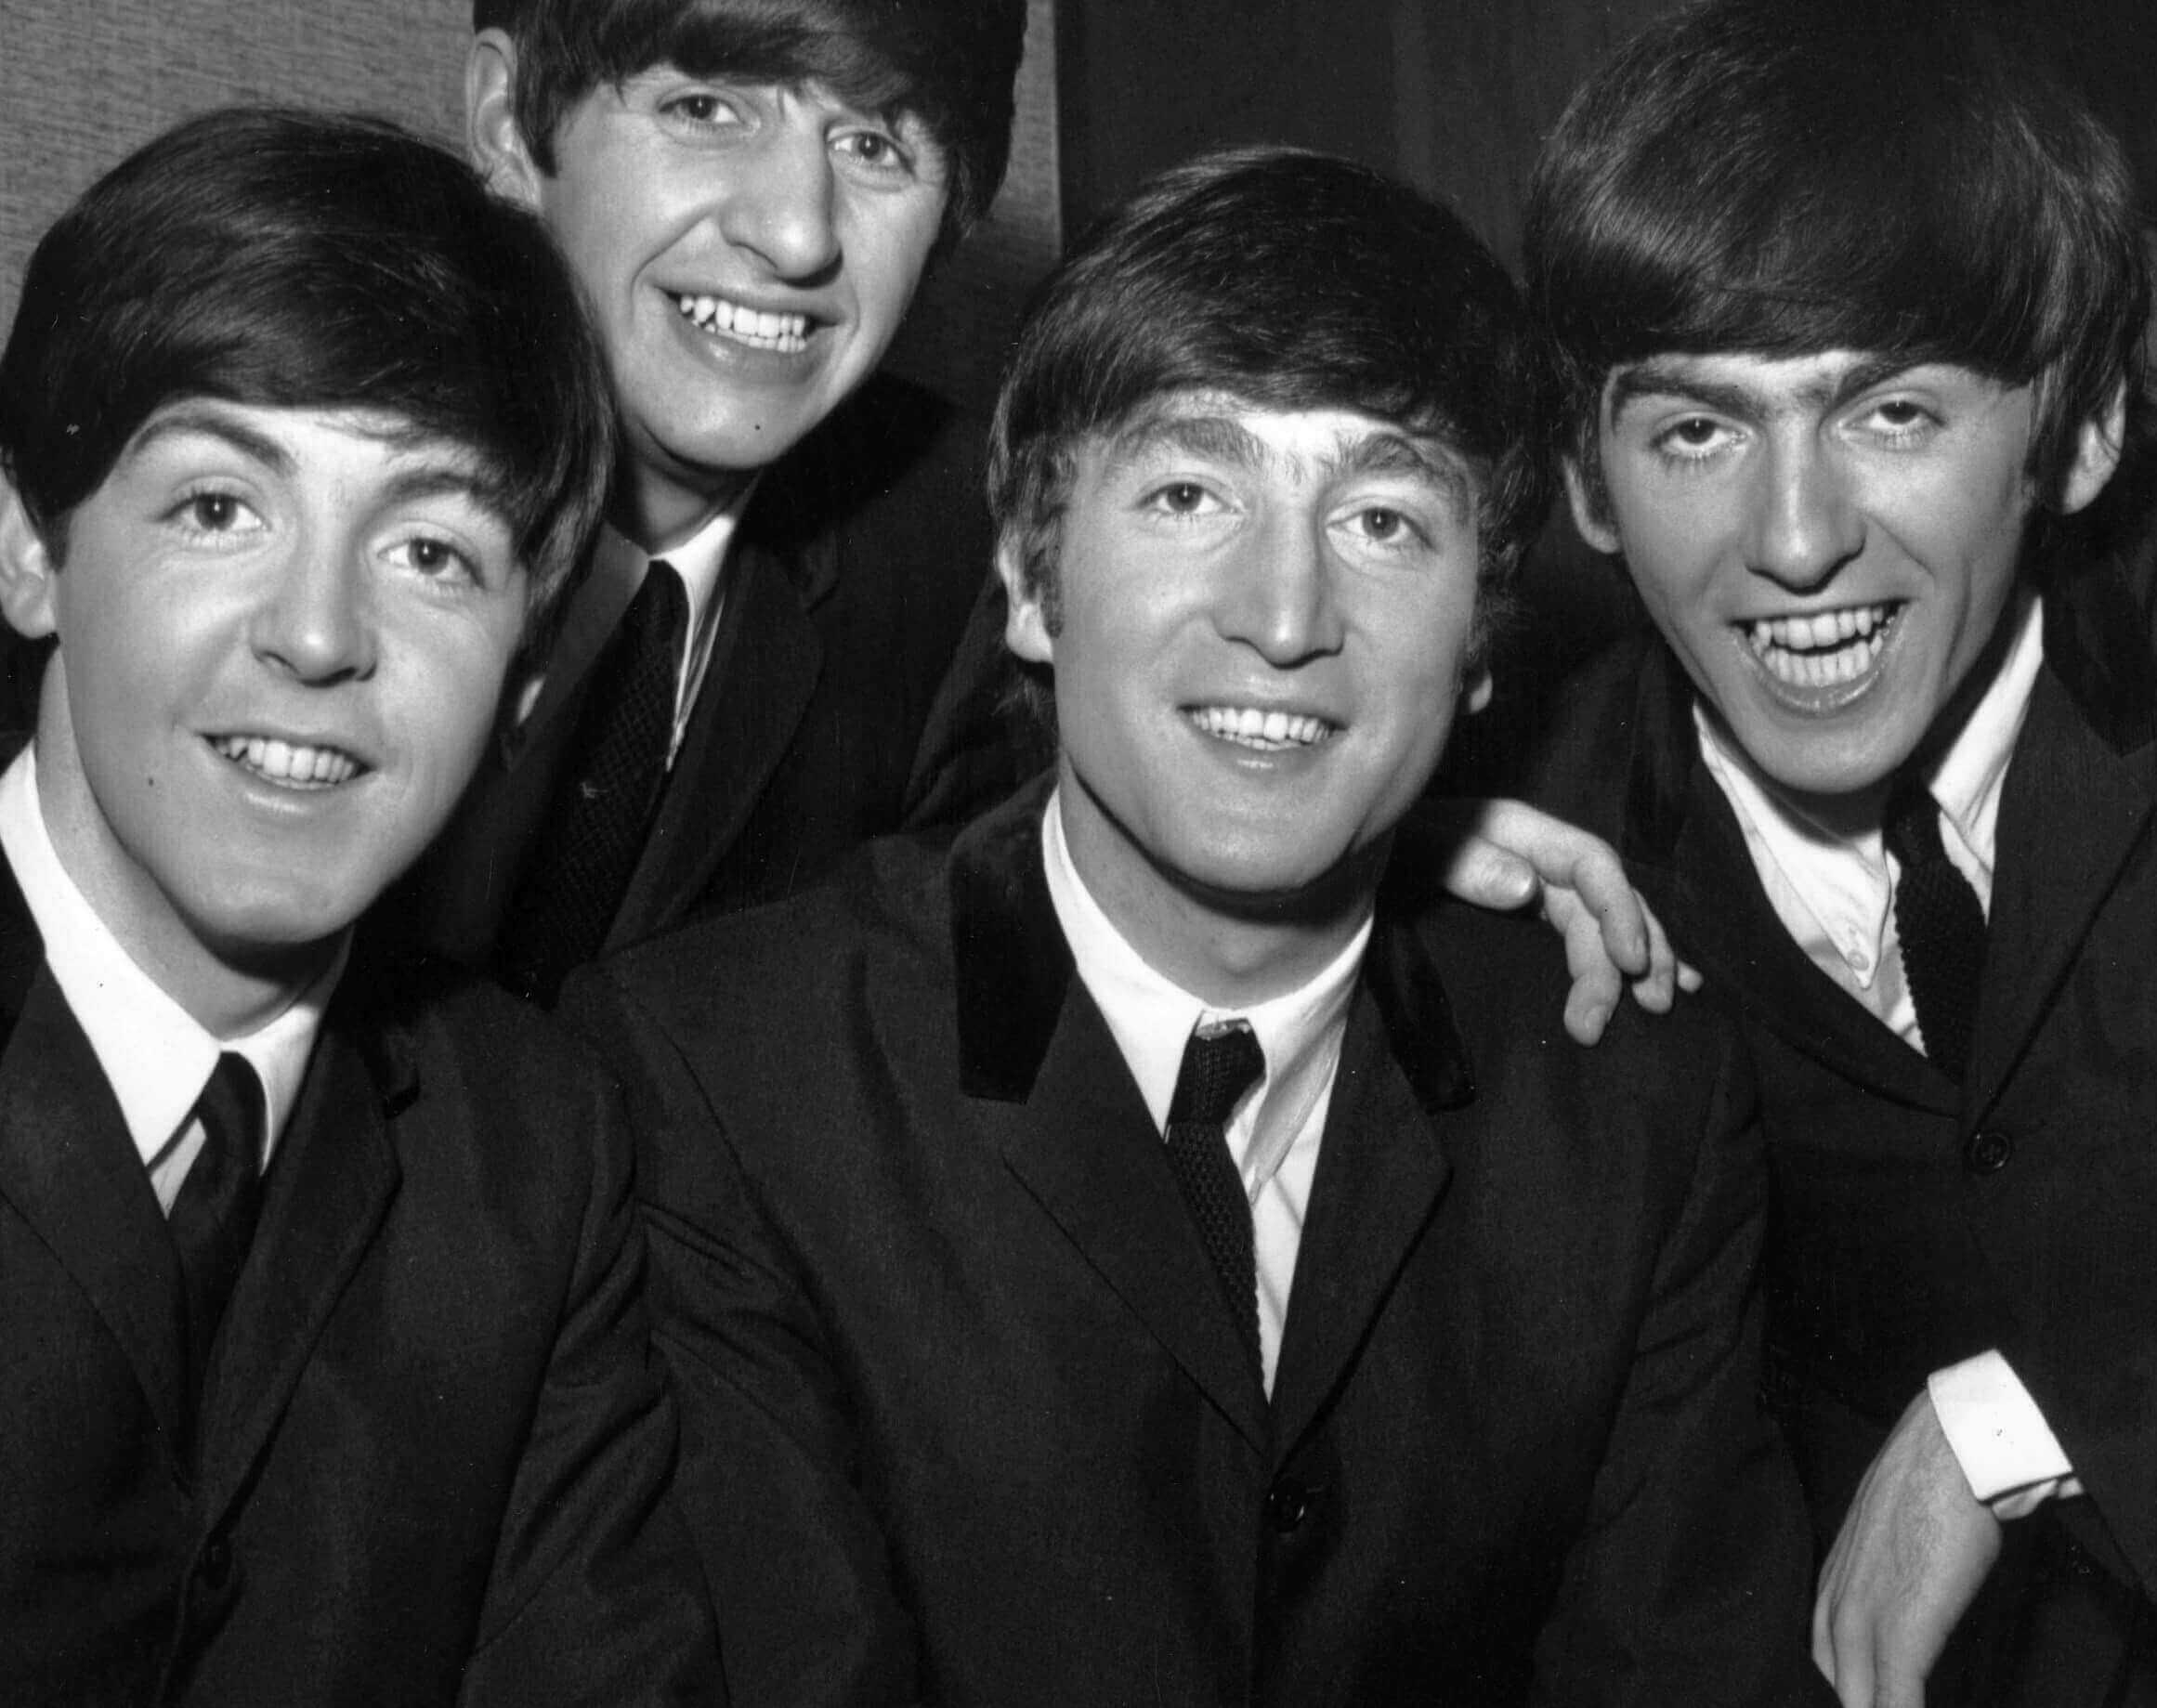 Paul mccartney say say say. The Beatles. The Beatles участники. Битлз деньги. Beatles photo.